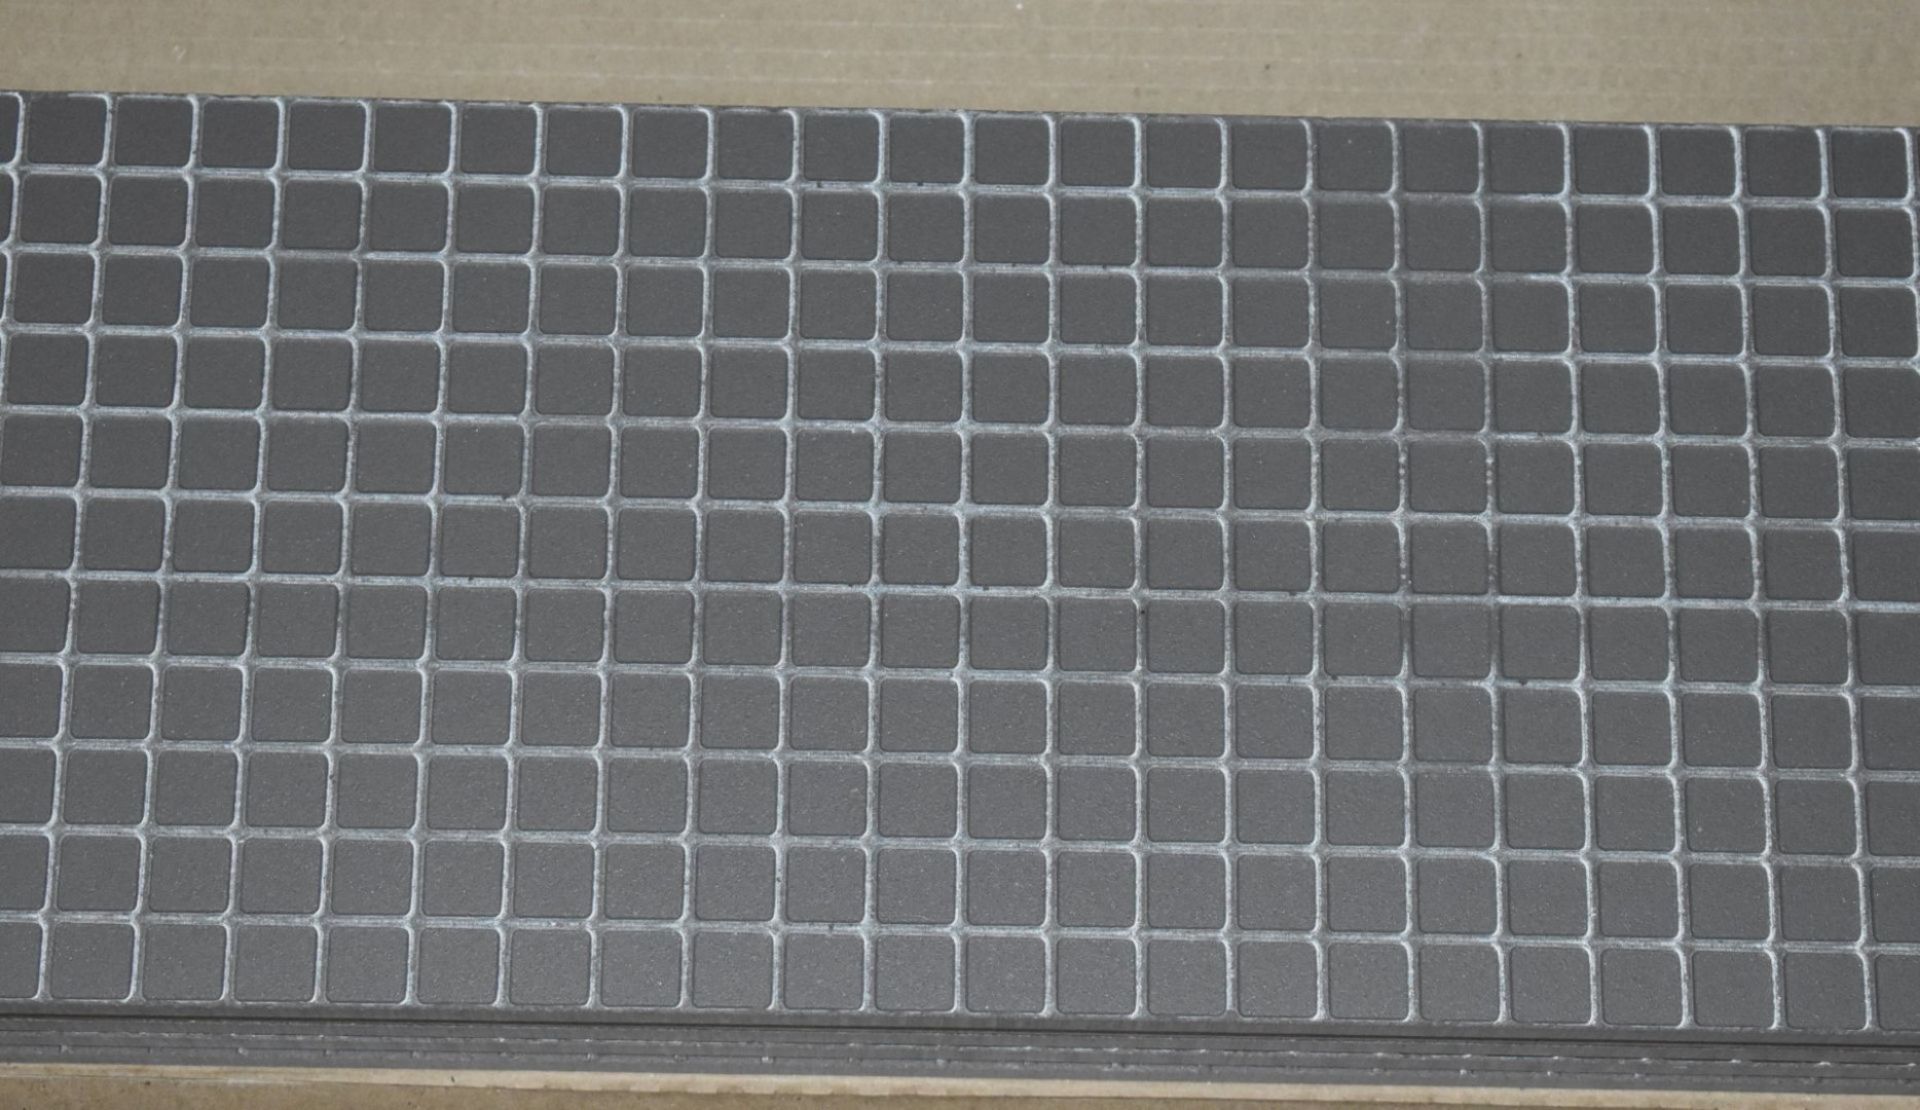 12 x Boxes of RAK Porcelain Floor or Wall Tiles - M Project Wood Design in Dark Grey - 19.5 x 120 cm - Image 3 of 11